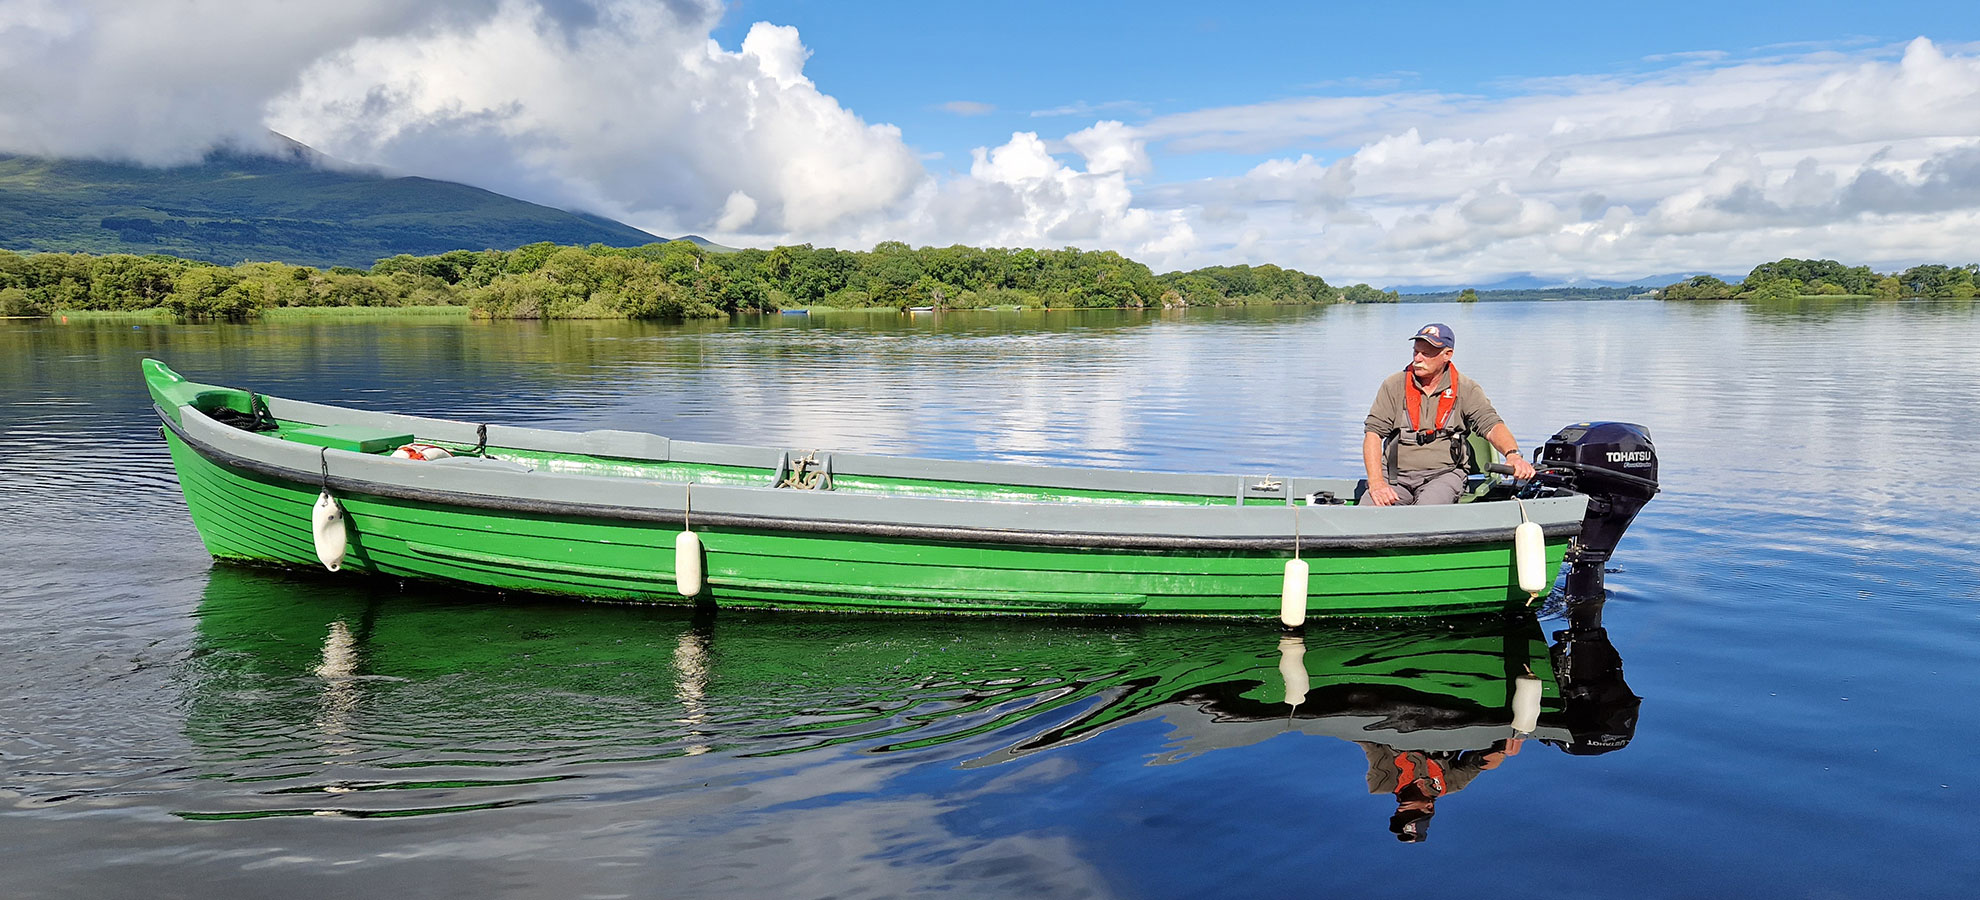 Lakes of Killarney Boat Tours of Innisfallen Island